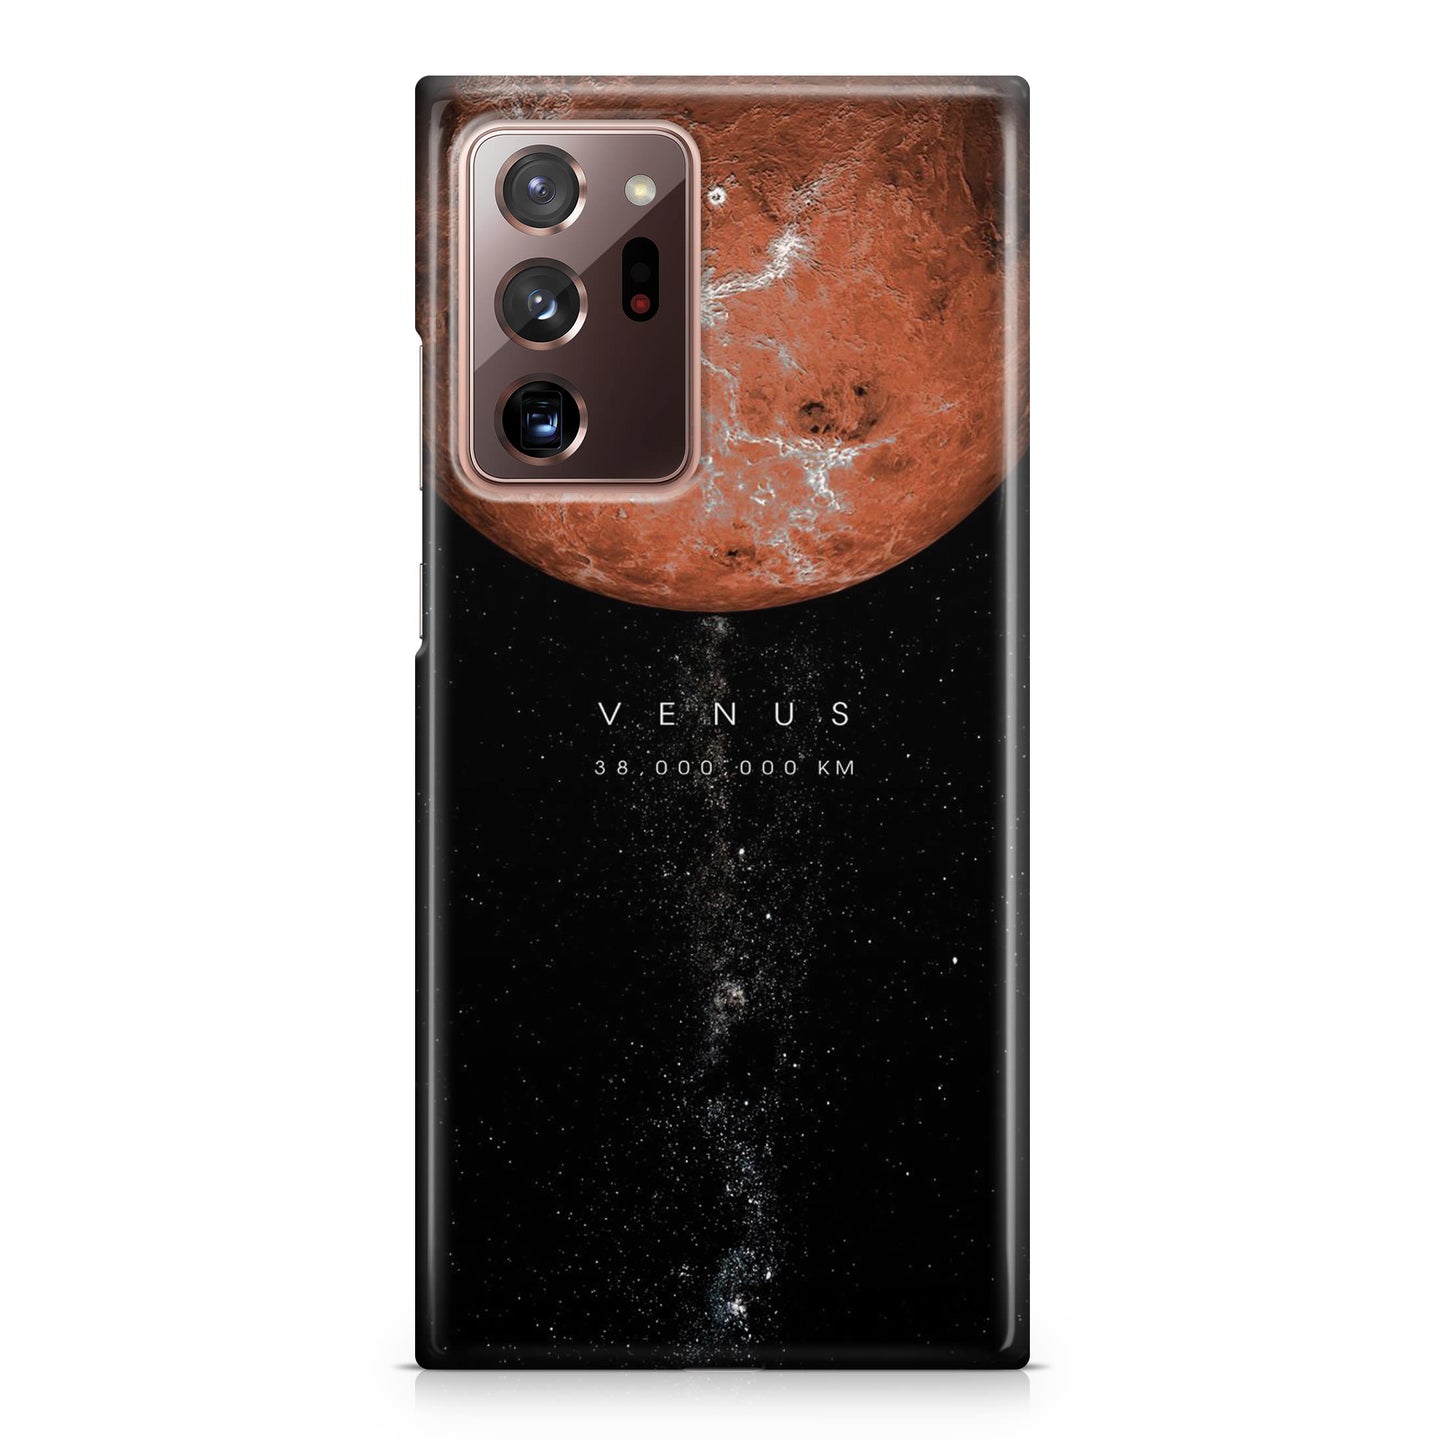 Planet Venus Galaxy Note 20 Ultra Case